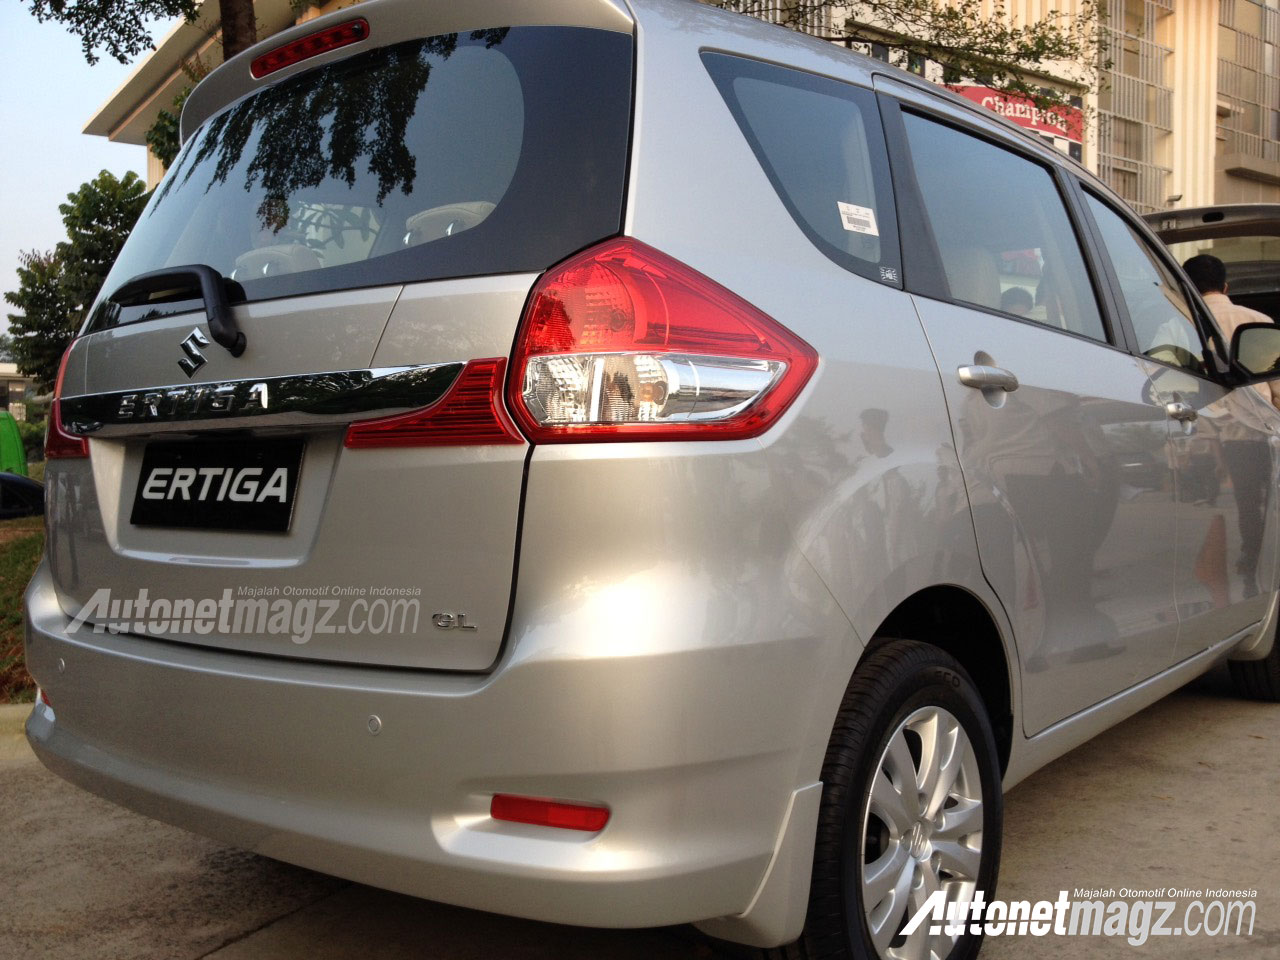 Impression Review Suzuki Ertiga Facelift 2015